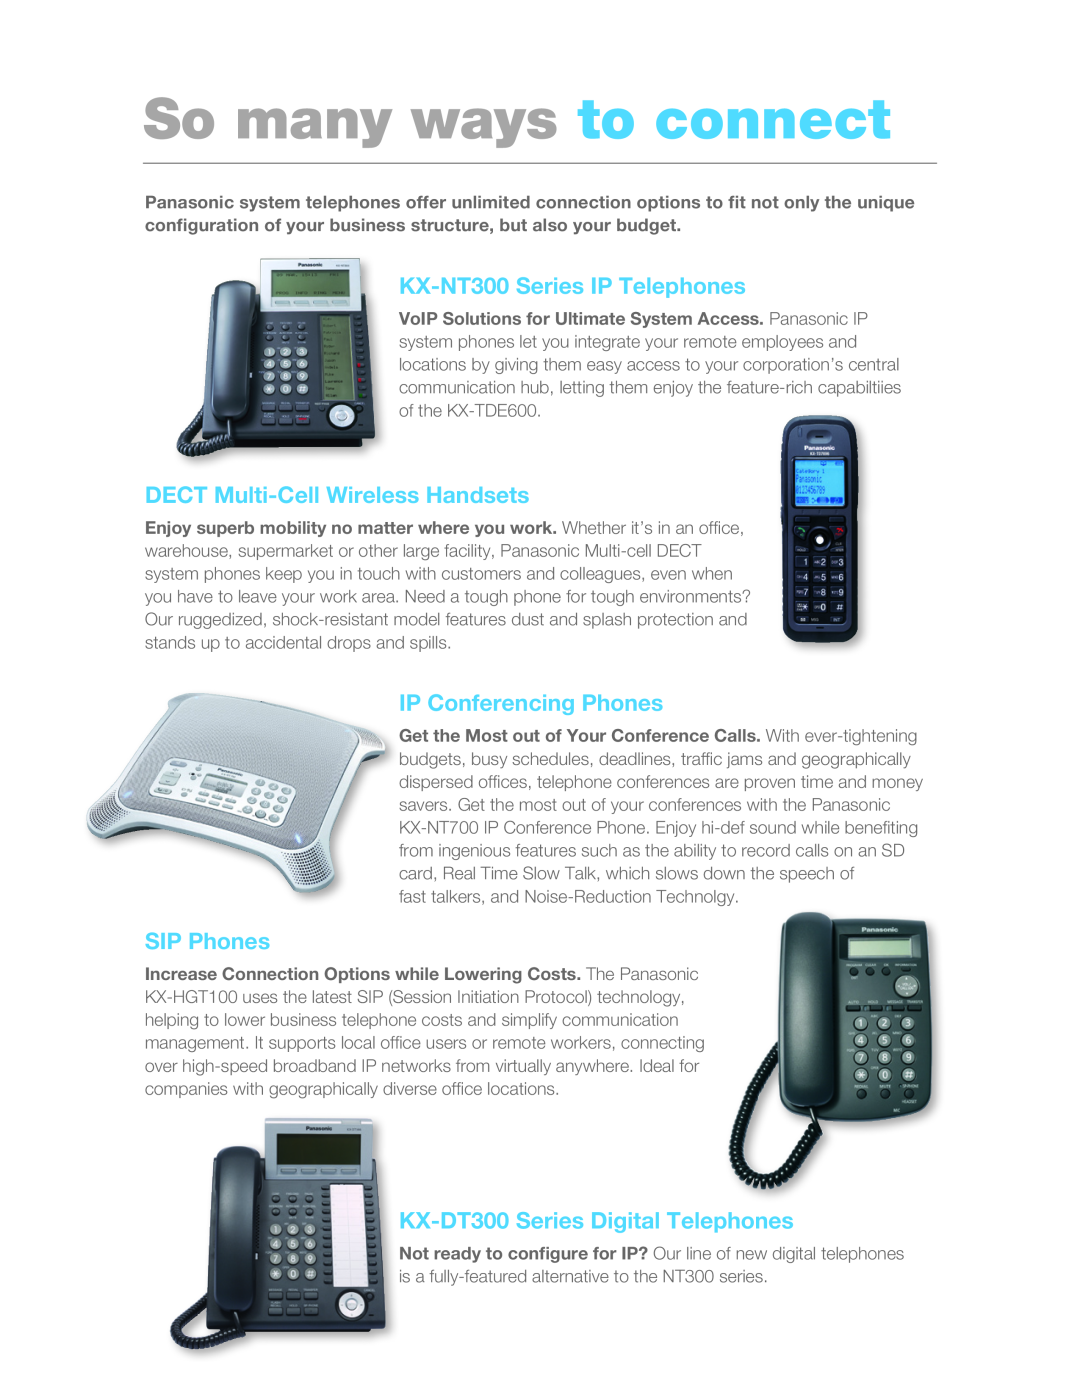 Panasonic KX-HGT100B KX-NT300 Series IP Telephones, DECT Multi-Cell Wireless Handsets, IP Conferencing Phones, SIP Phones 